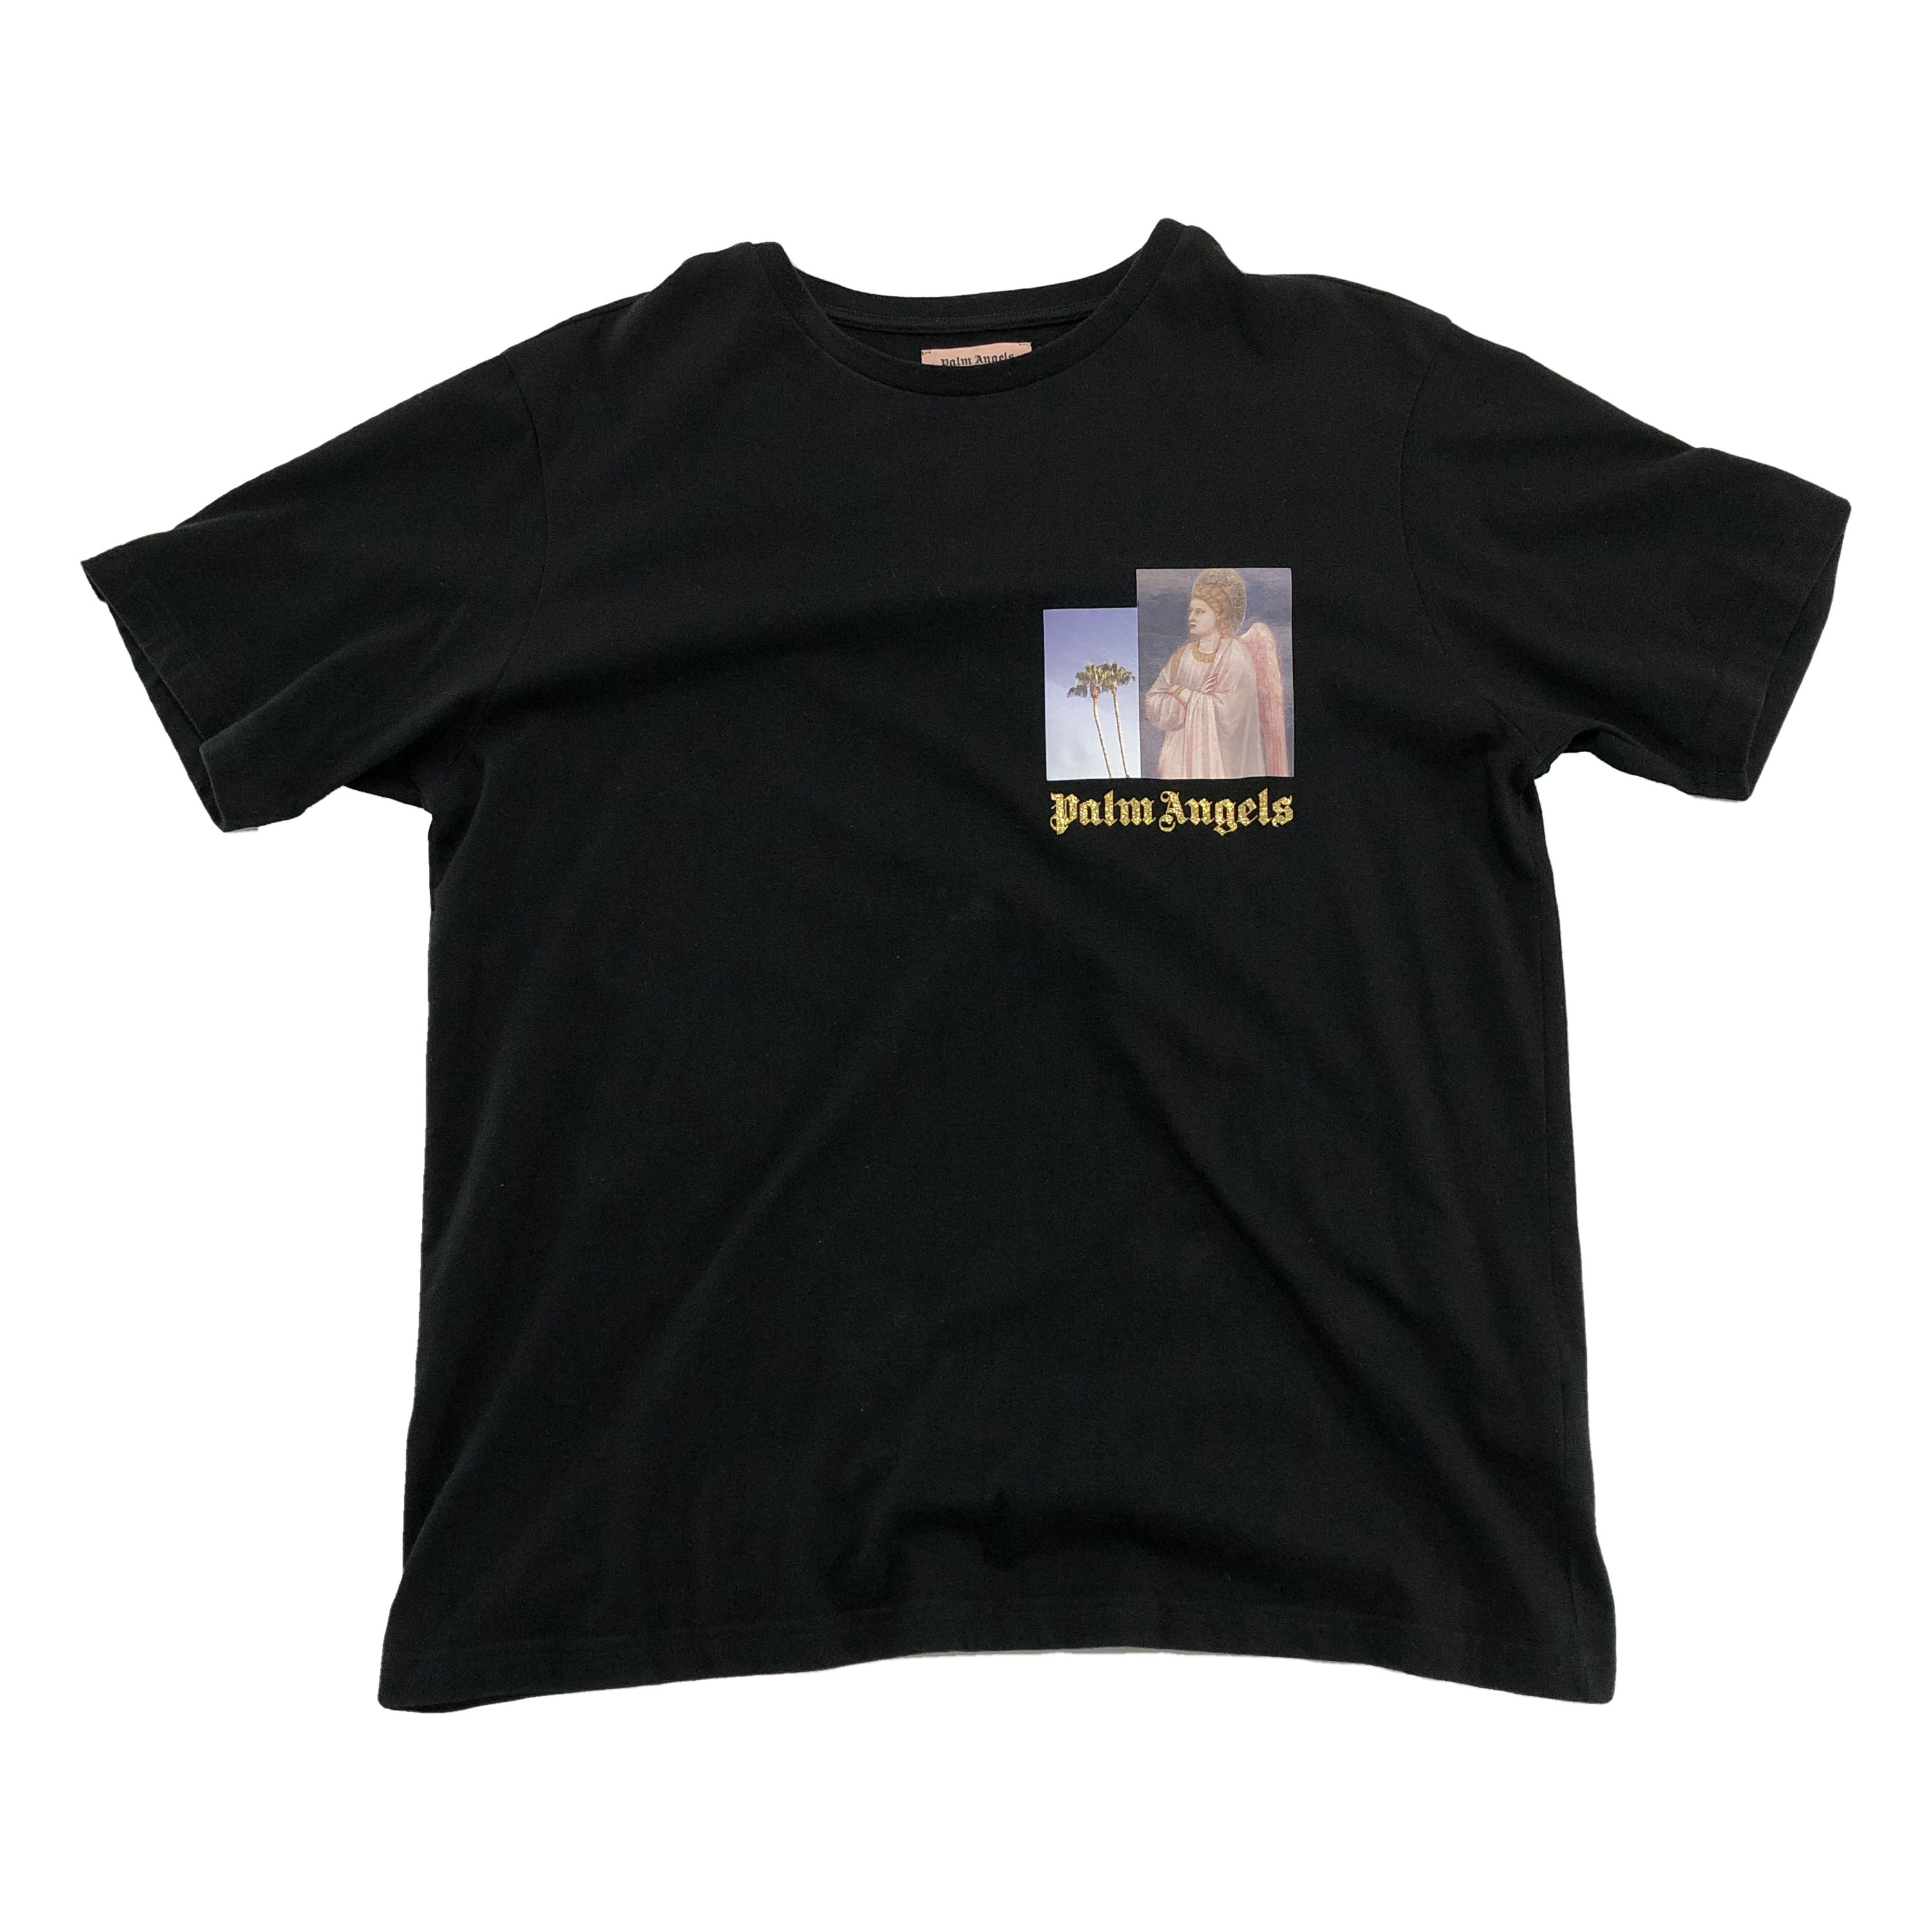 [Palm Angels] Tshirt - Size M